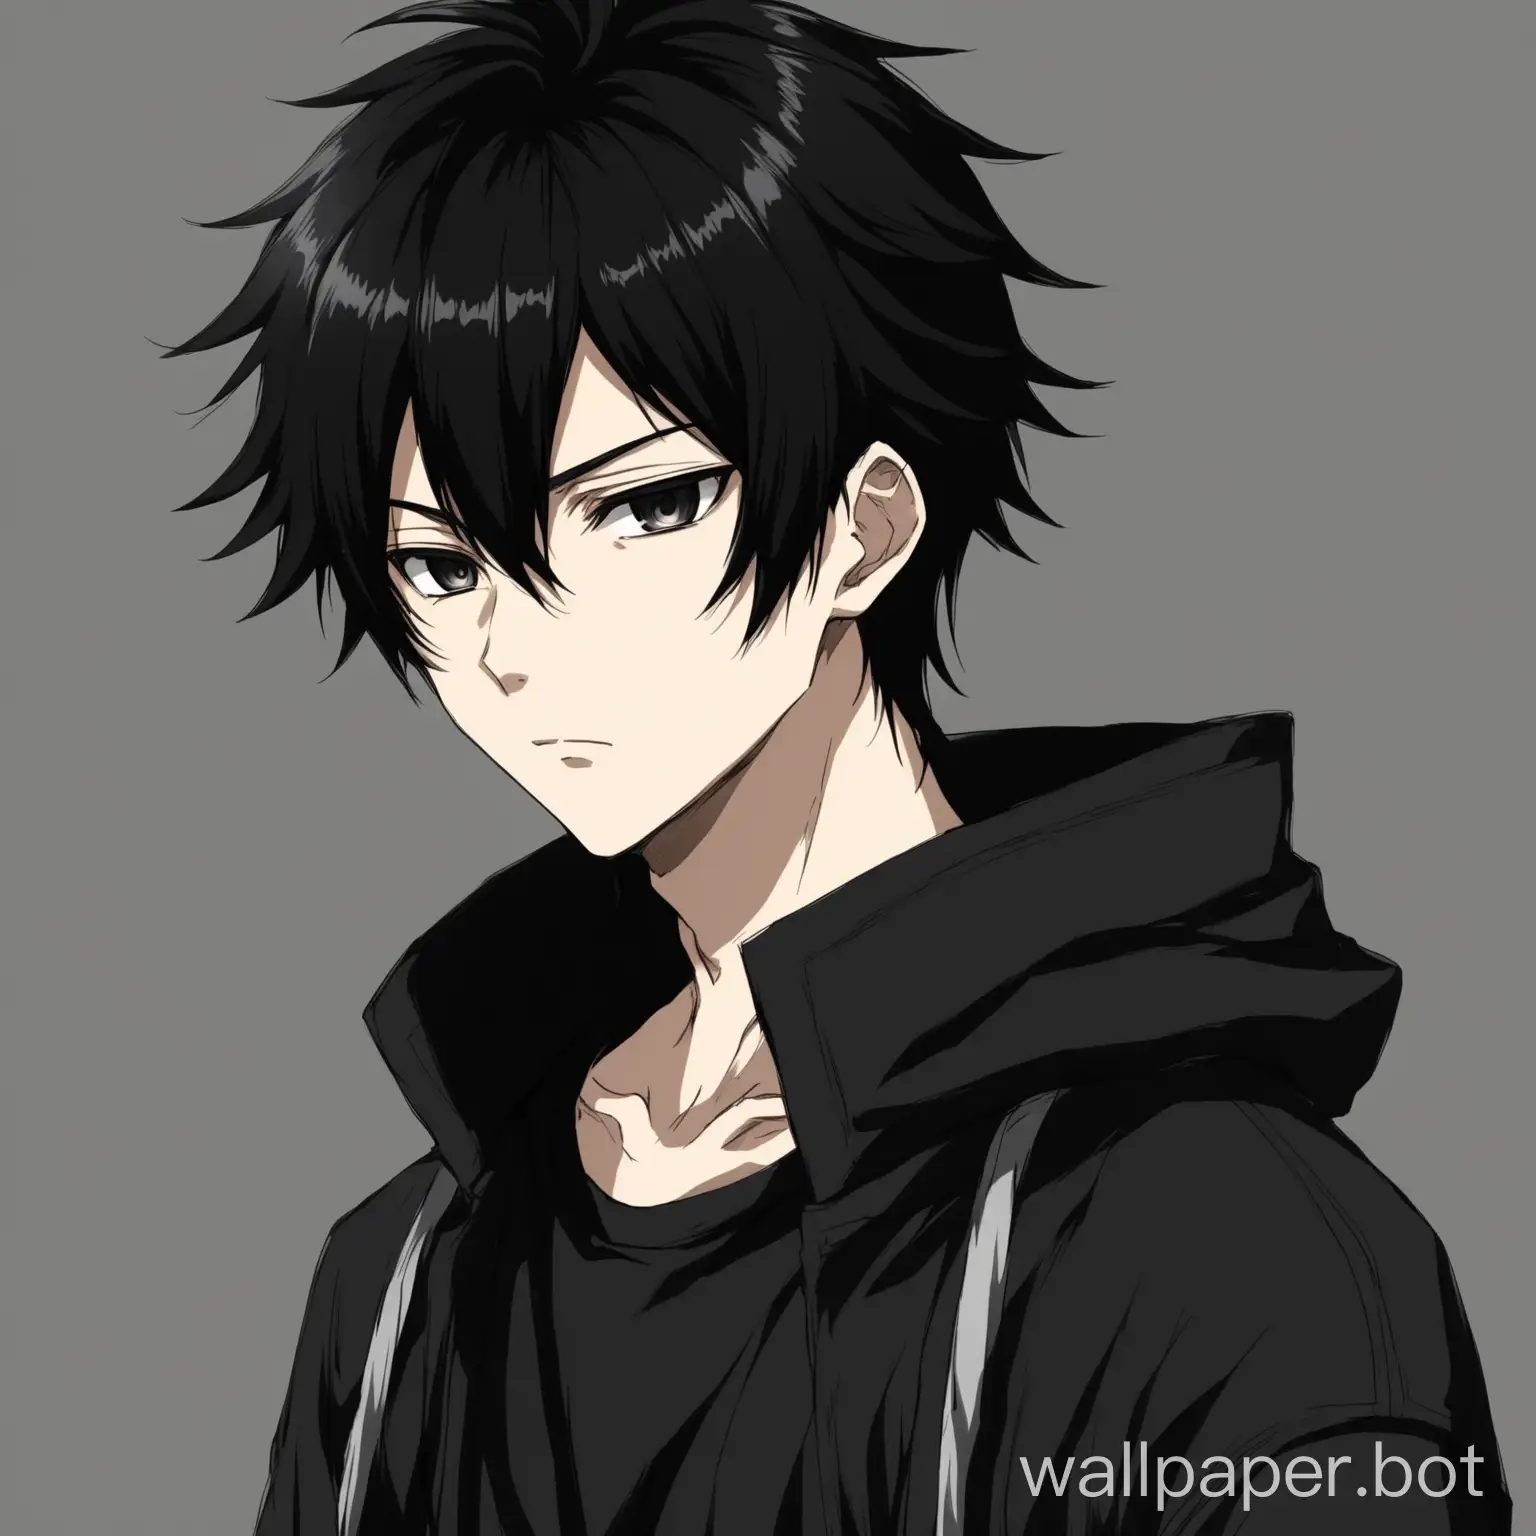 anime boy black hair

